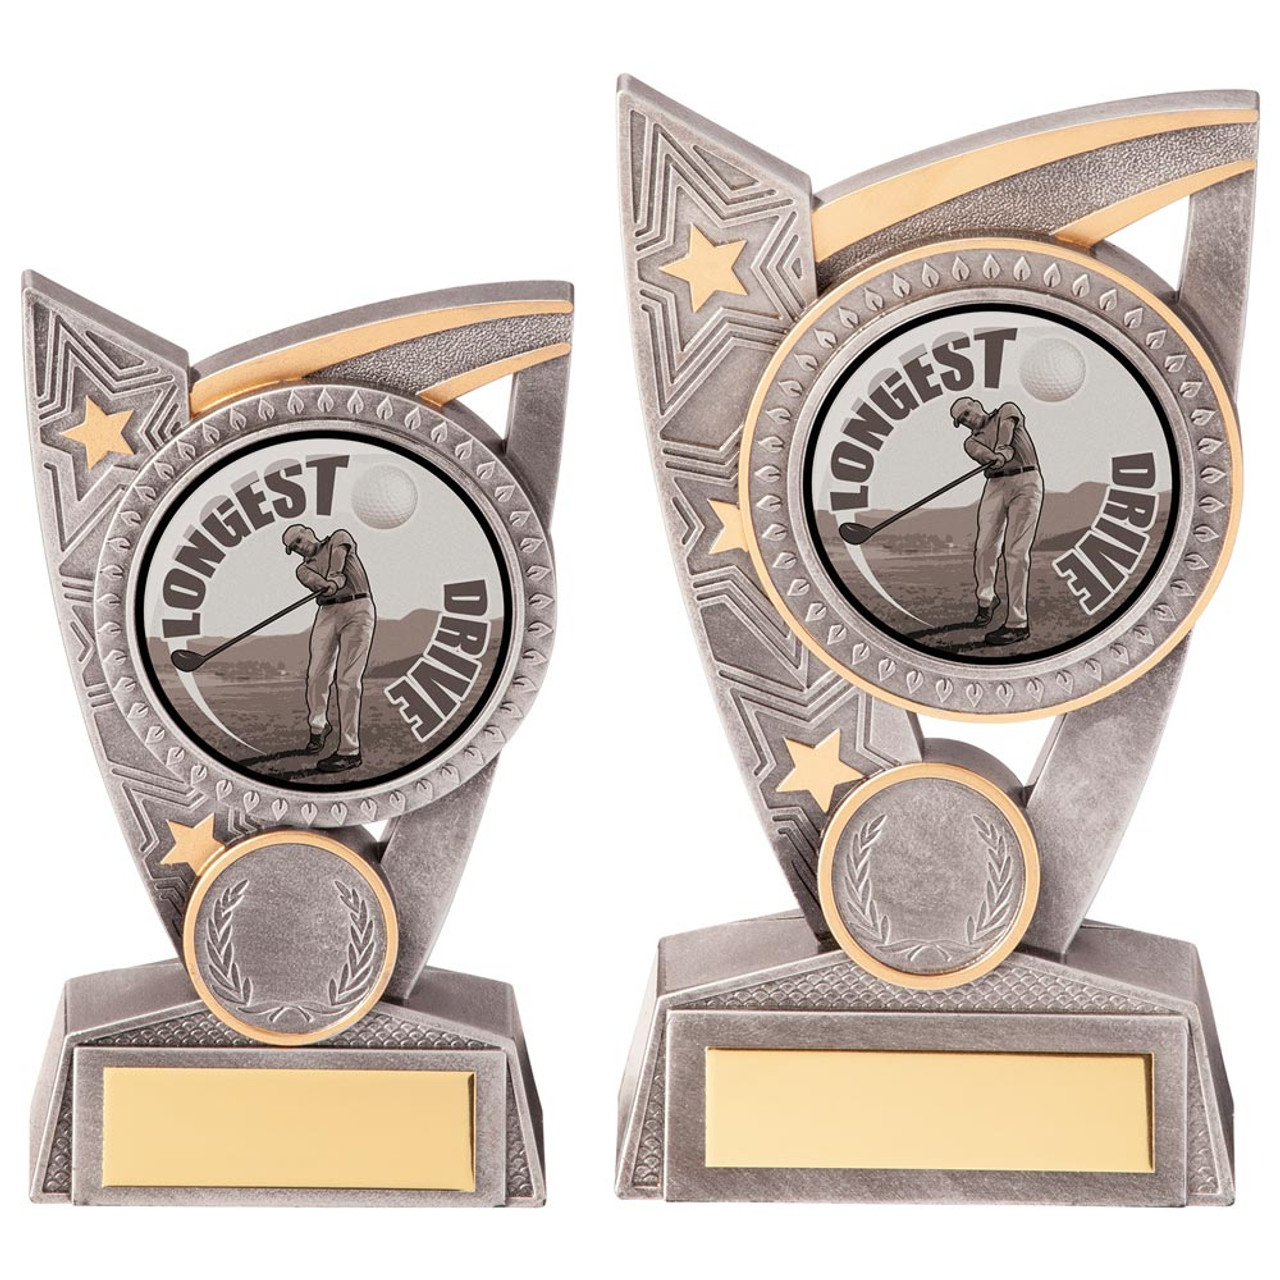 Longest Drive Golf Silver & Gold Triumph Award in 2 Sizes